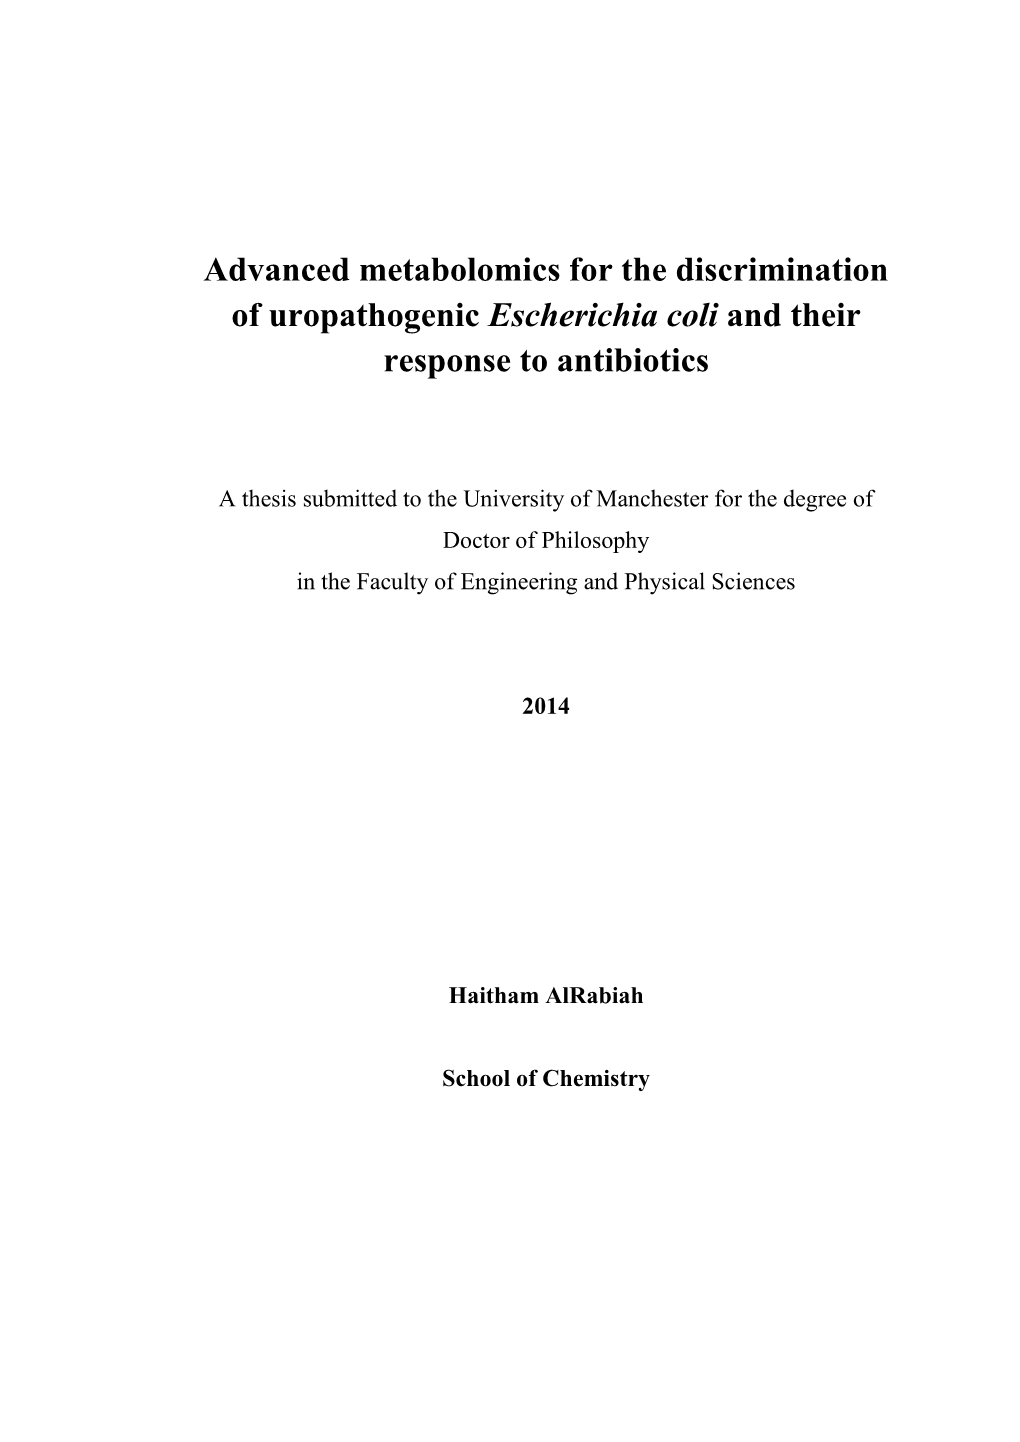 Advanced Metabolomics for the Discrimination of Uropathogenic Escherichia Coli and Their Response to Antibiotics